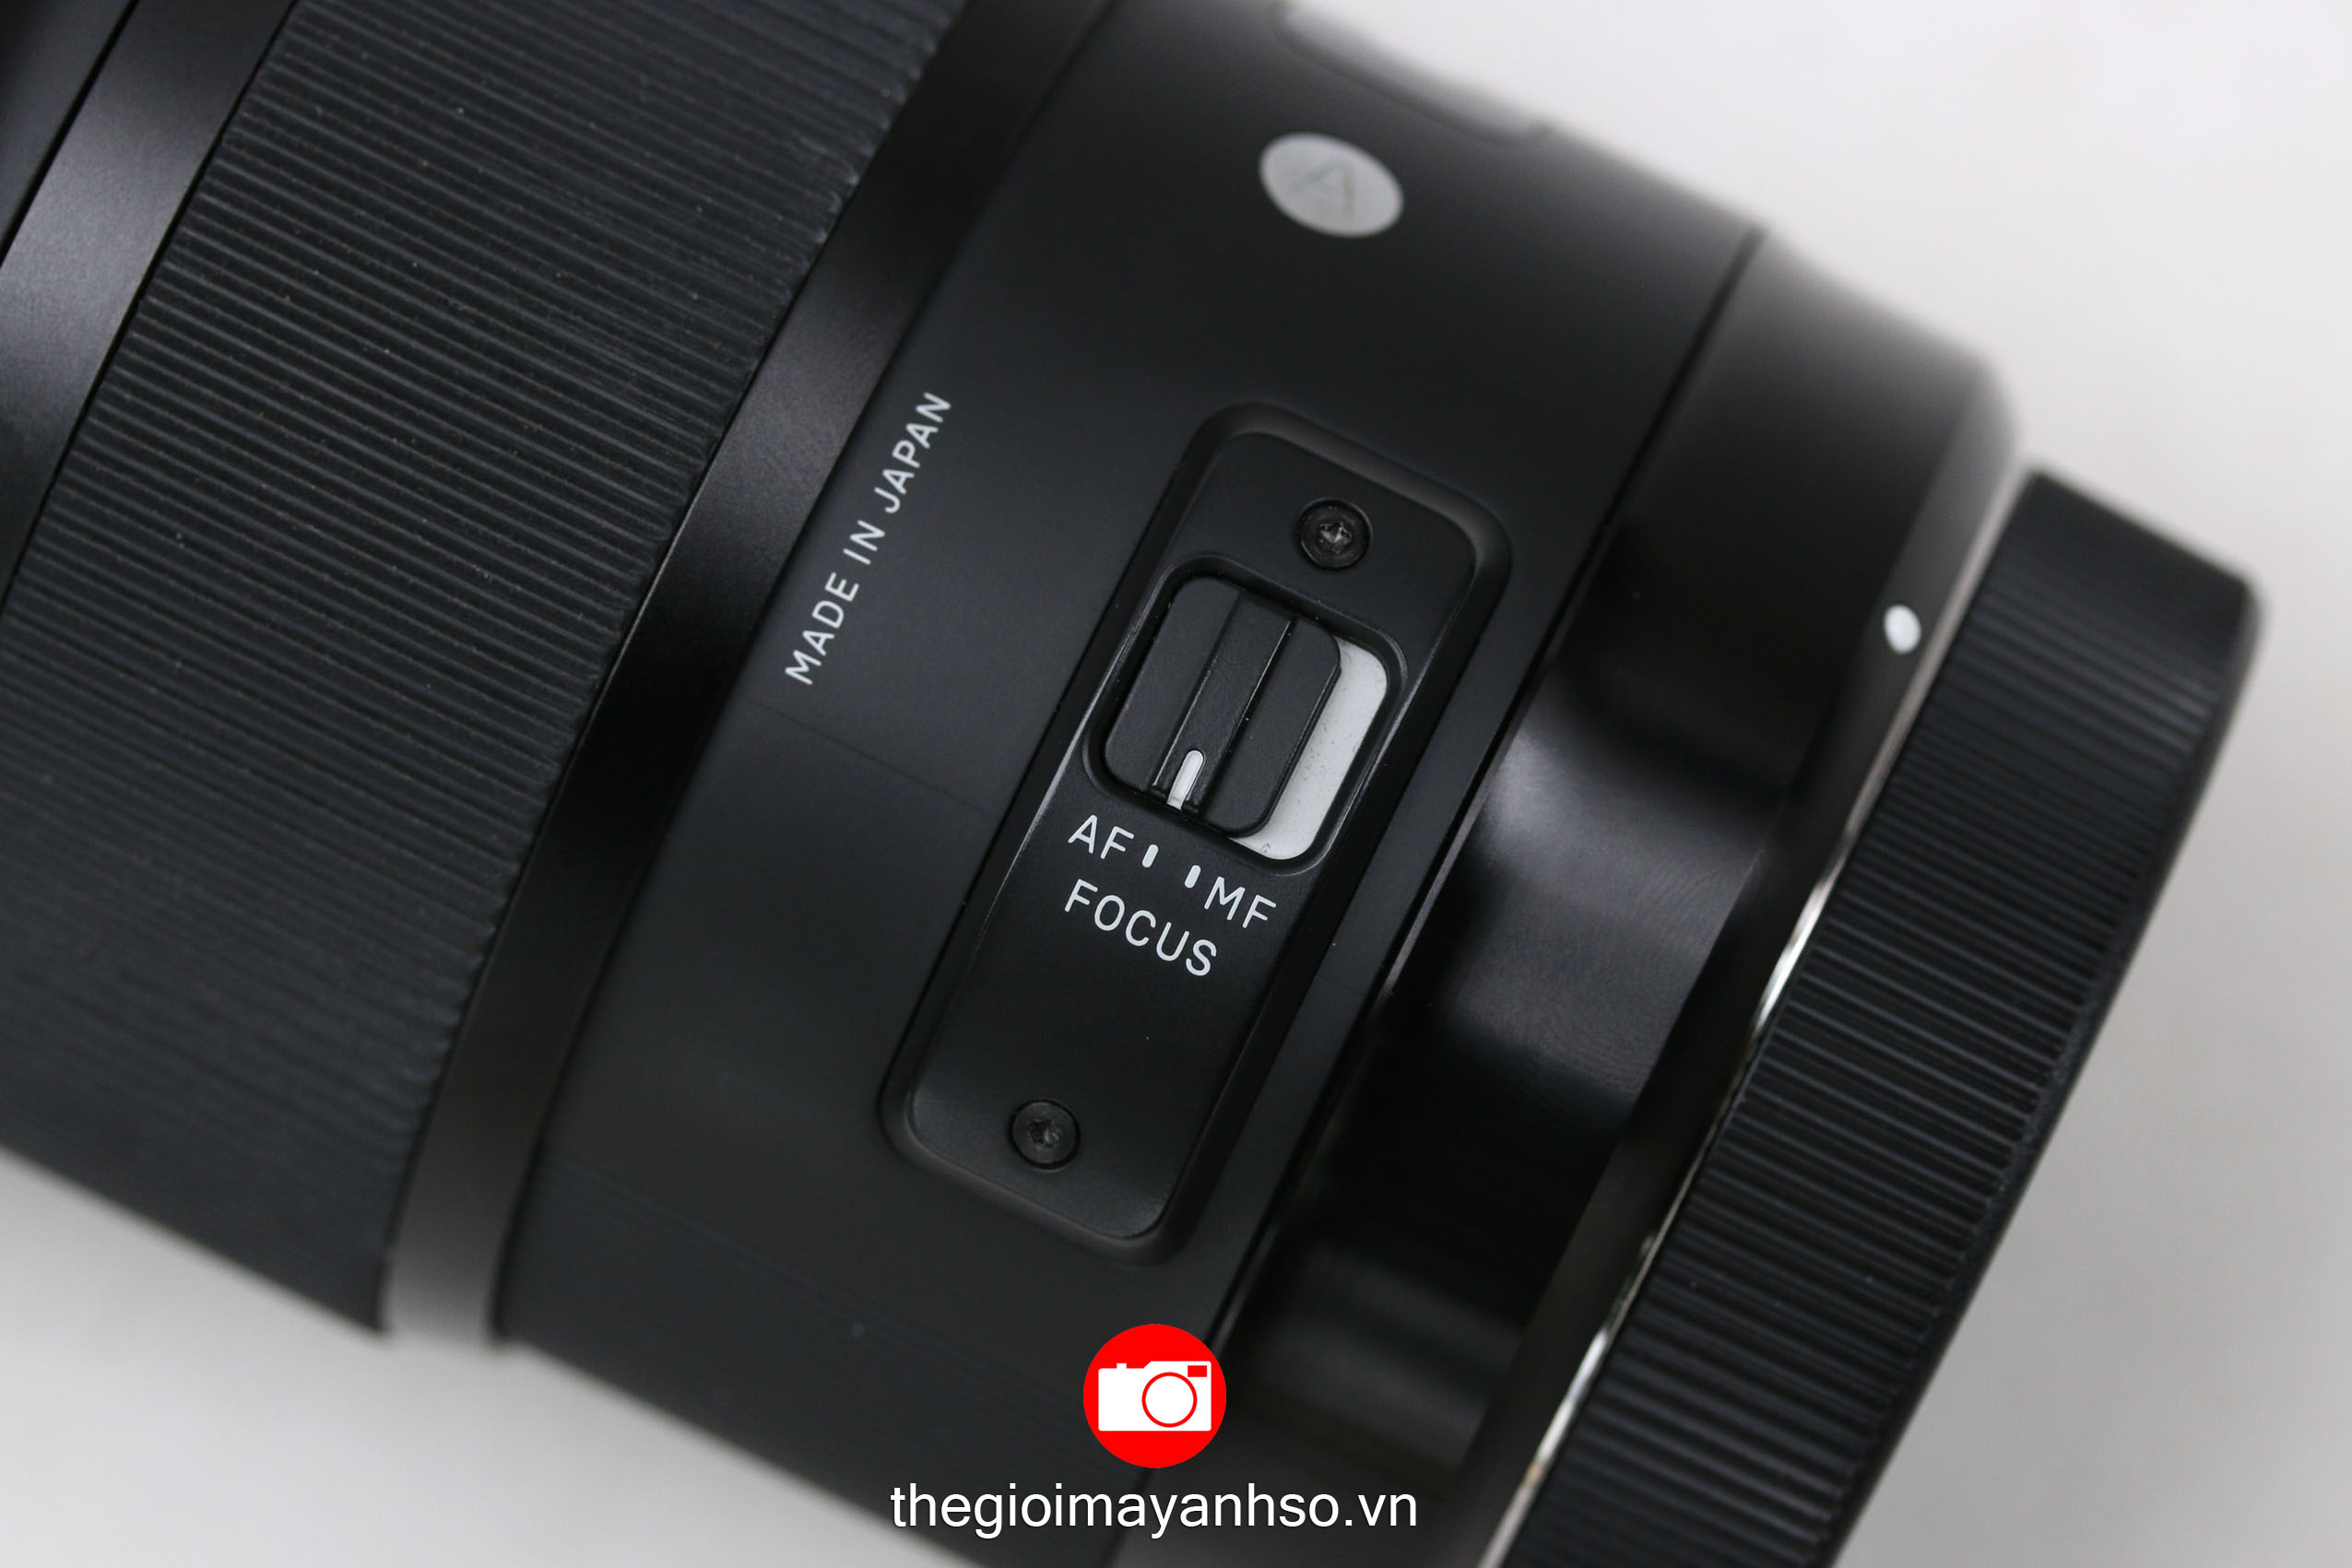 Ống Kính Sigma 50mm f/1.4 DG HSM ART Lens for Canon